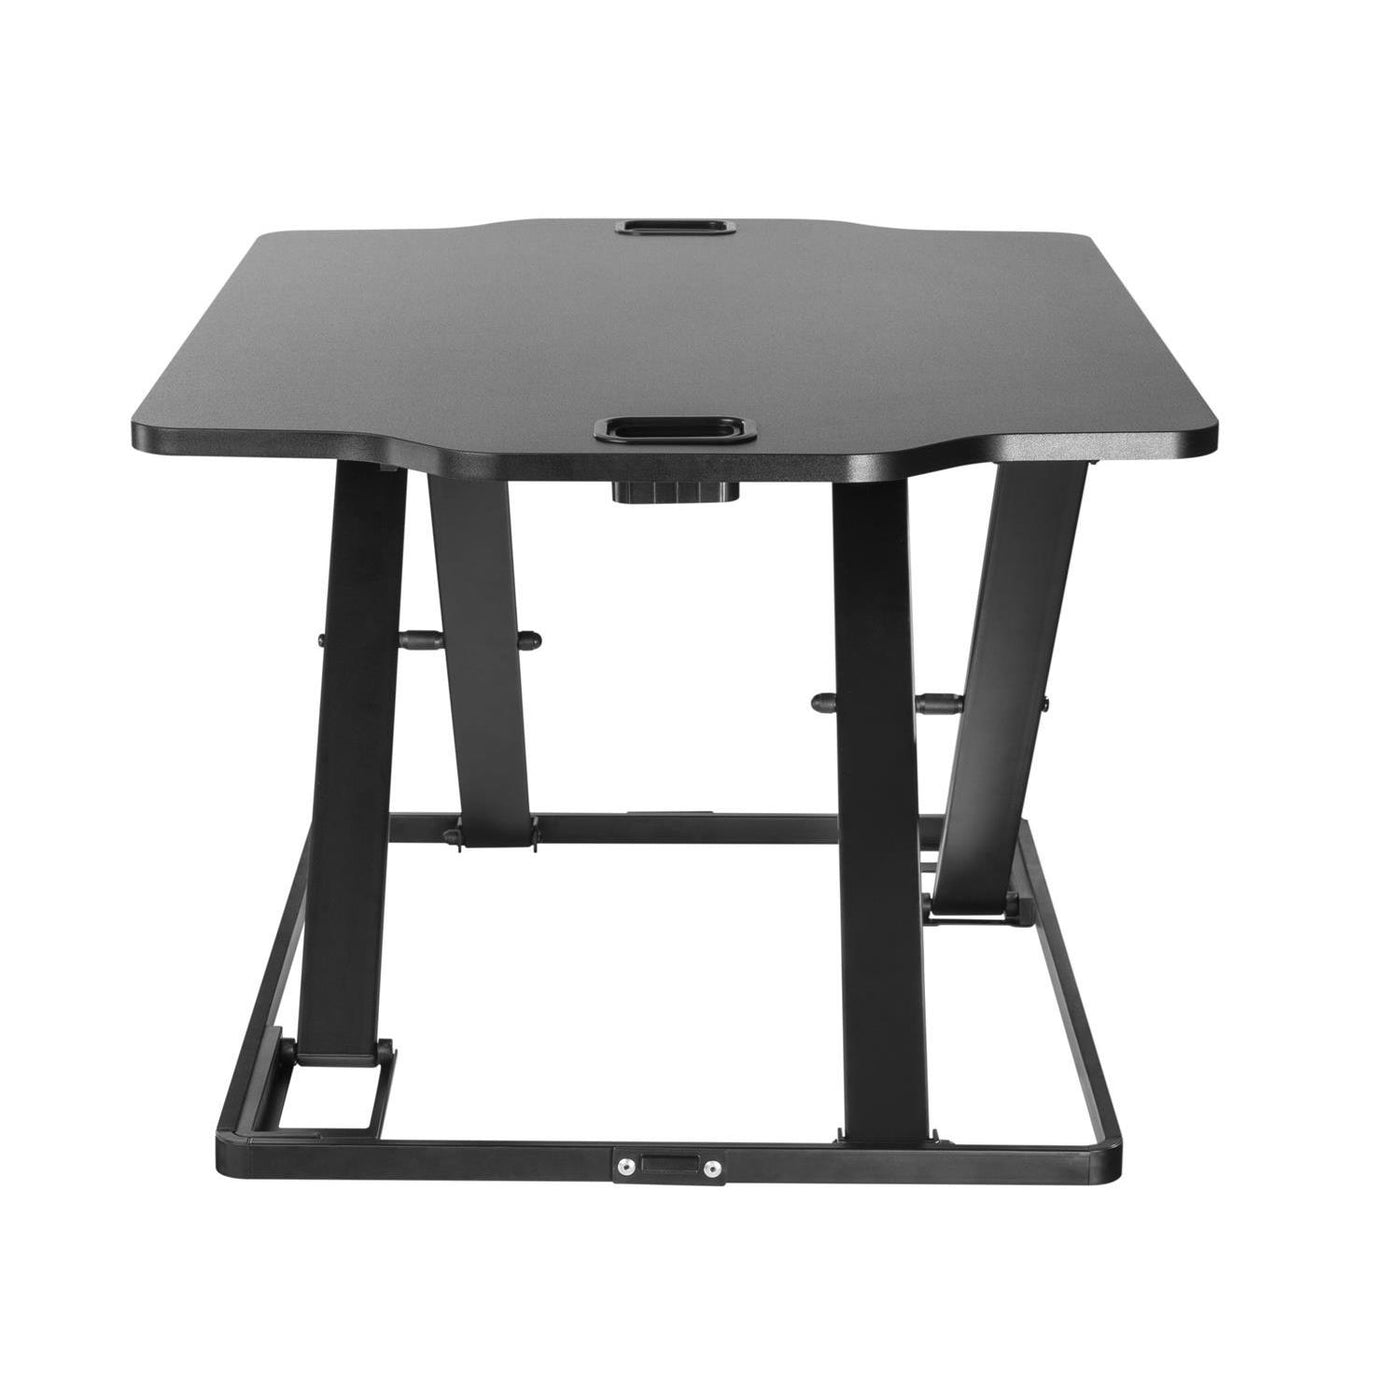 Ergo Office ER-419 Monitor Laptop Stand Desk Height Adjustable Standing Sitting Work Ultra Thin 10kg